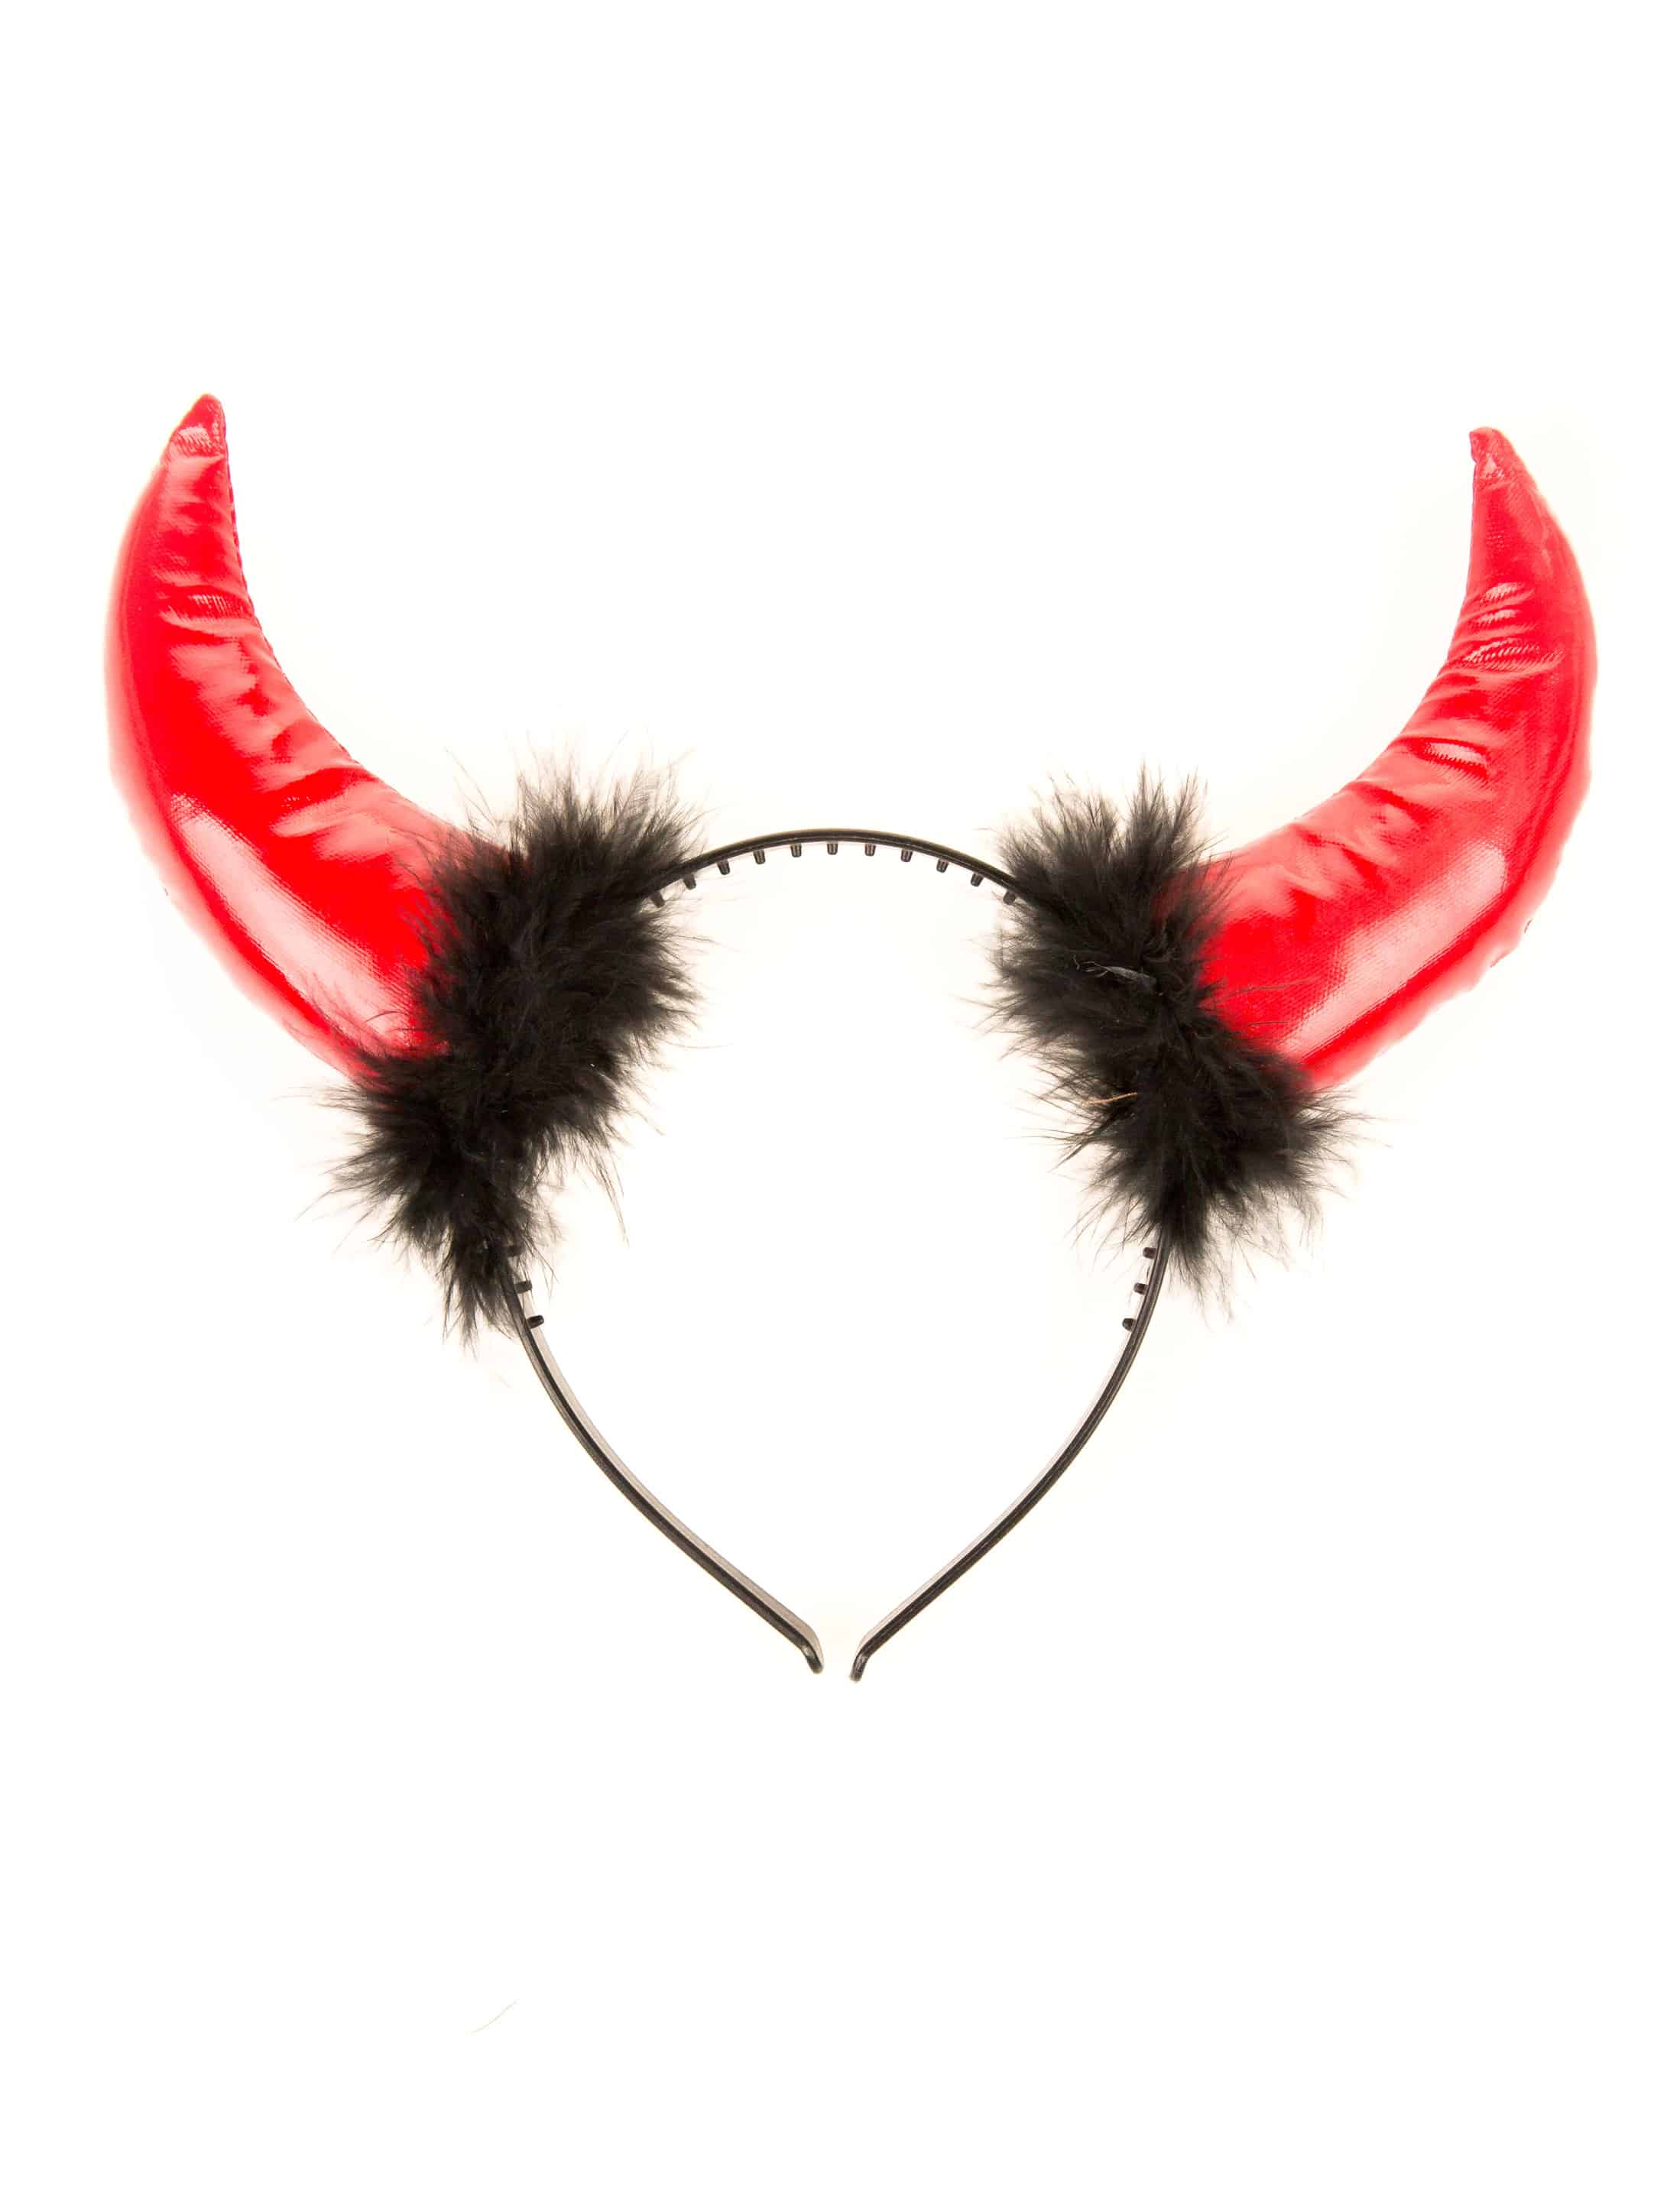 Haarreif Teufel rot mit schwarzen Federn